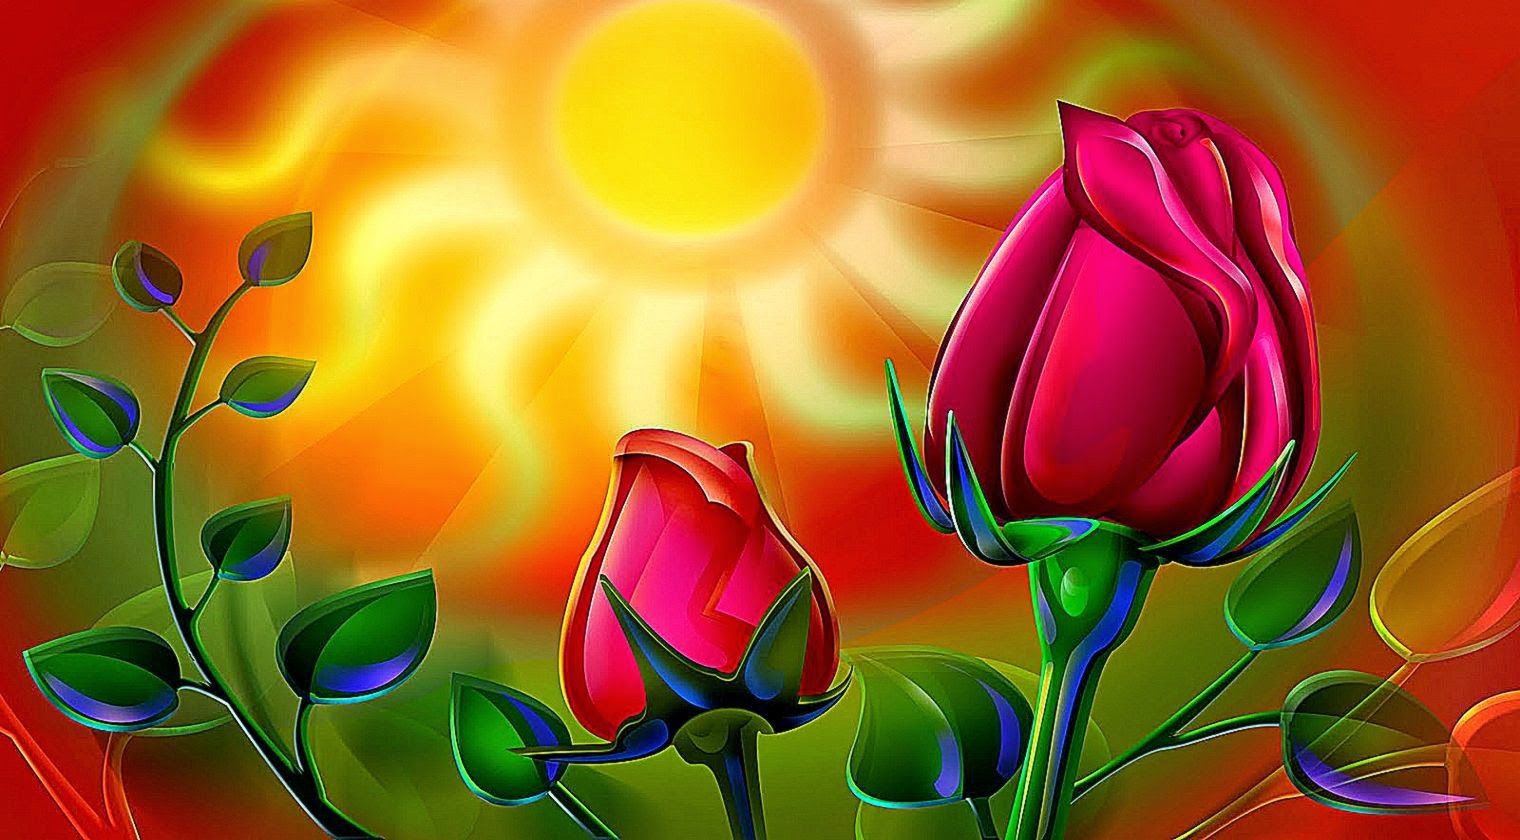 3D Rose Flower Wallpaper. Wallpaper Background Gallery